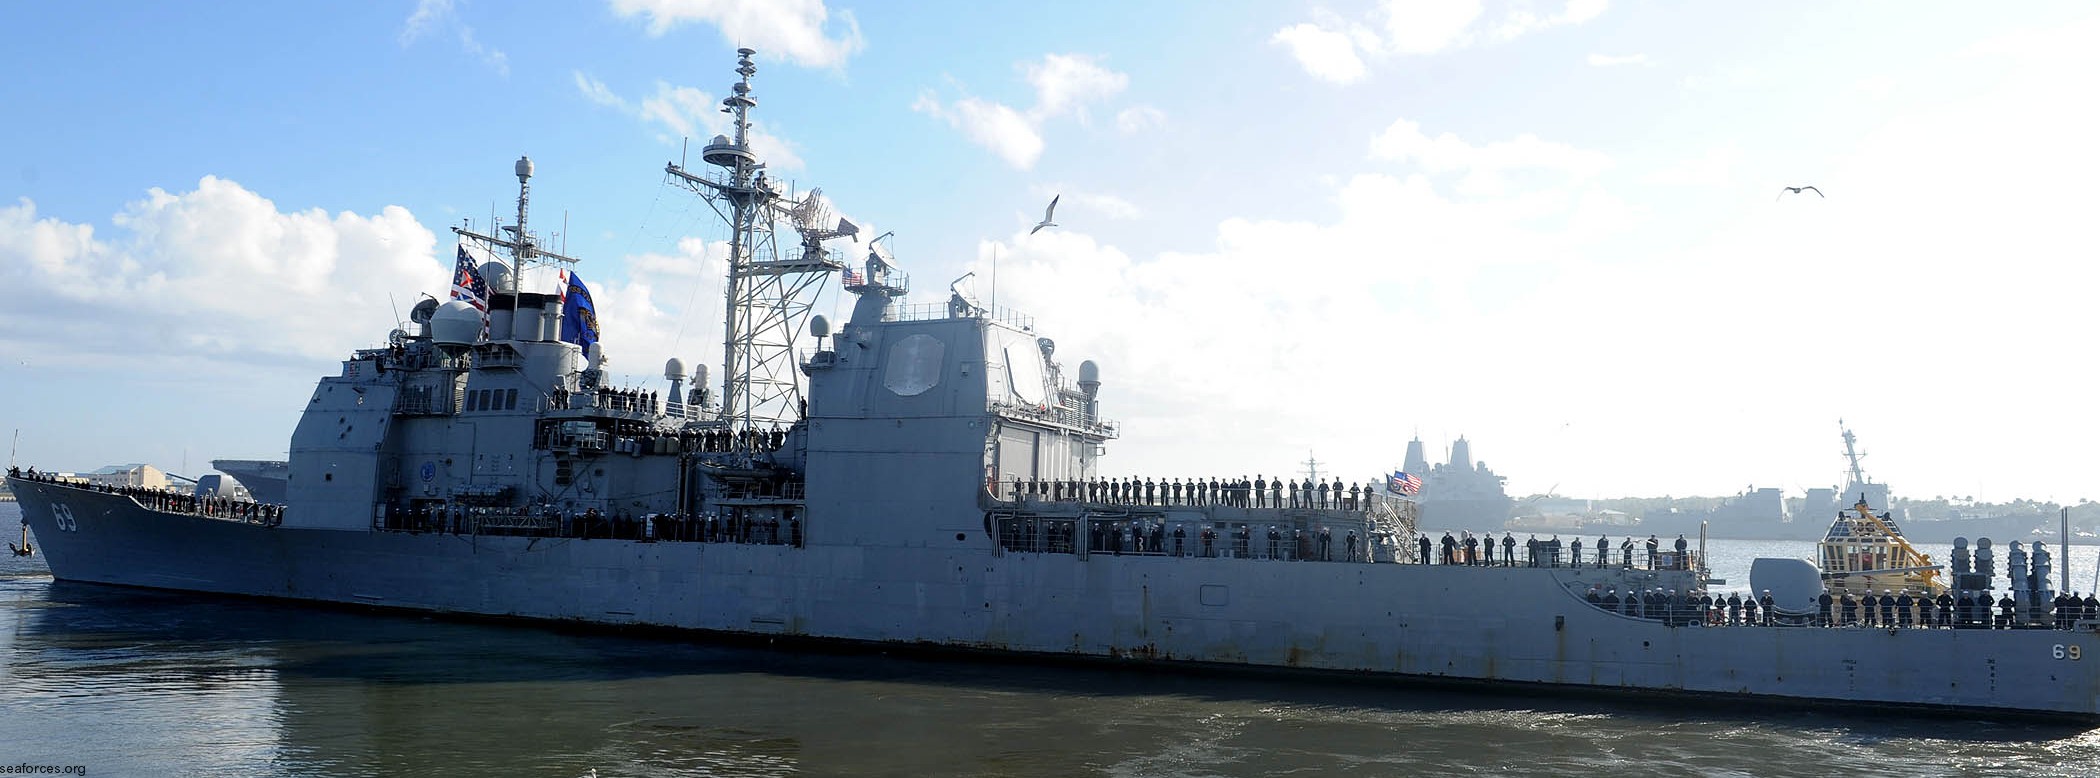 cg-69 uss vicksburg ticonderoga class guided missile cruiser us navy 11 mayport florida